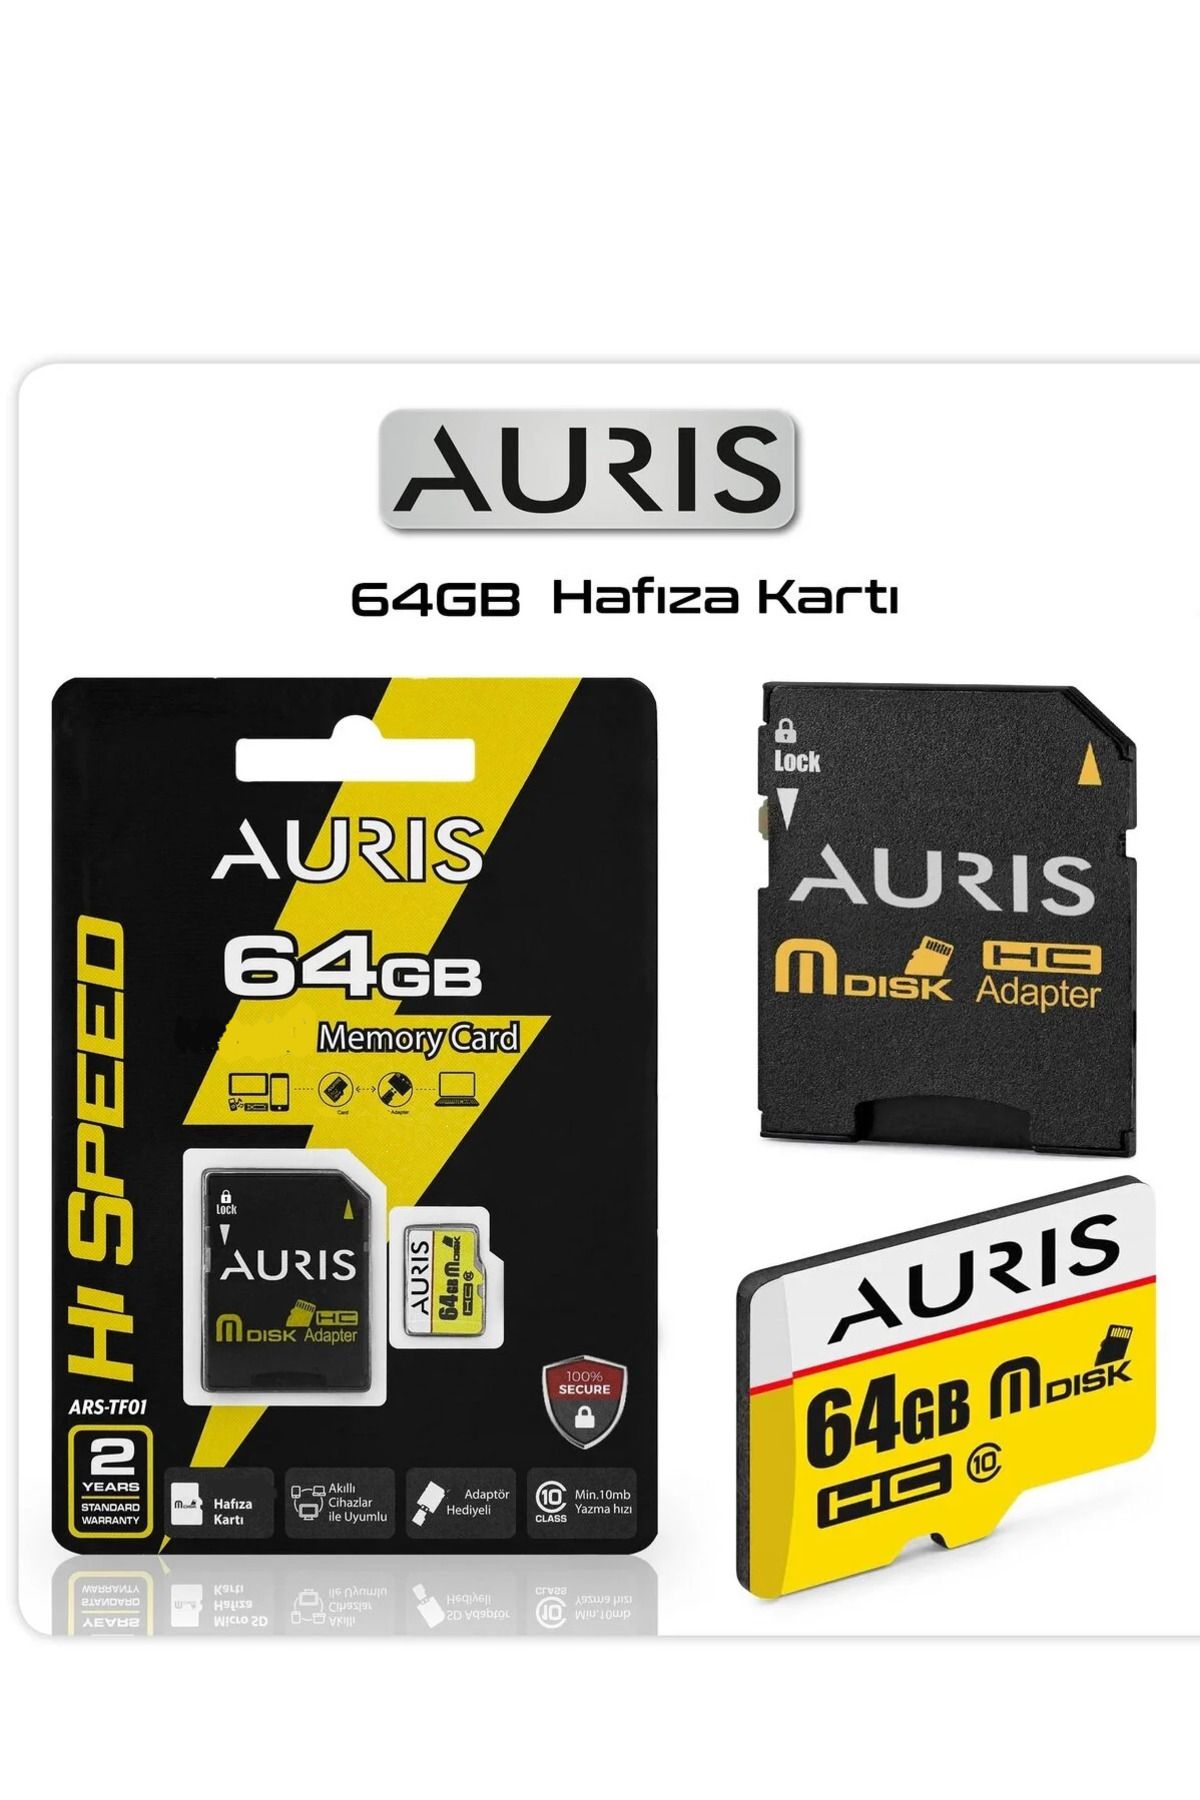 Auris 64 GB HAFIZA KARTI VE ADAPTÖR  TELEFON TABLET & FOTOĞRAF MAKİNASI & AKSİYON KAMERA